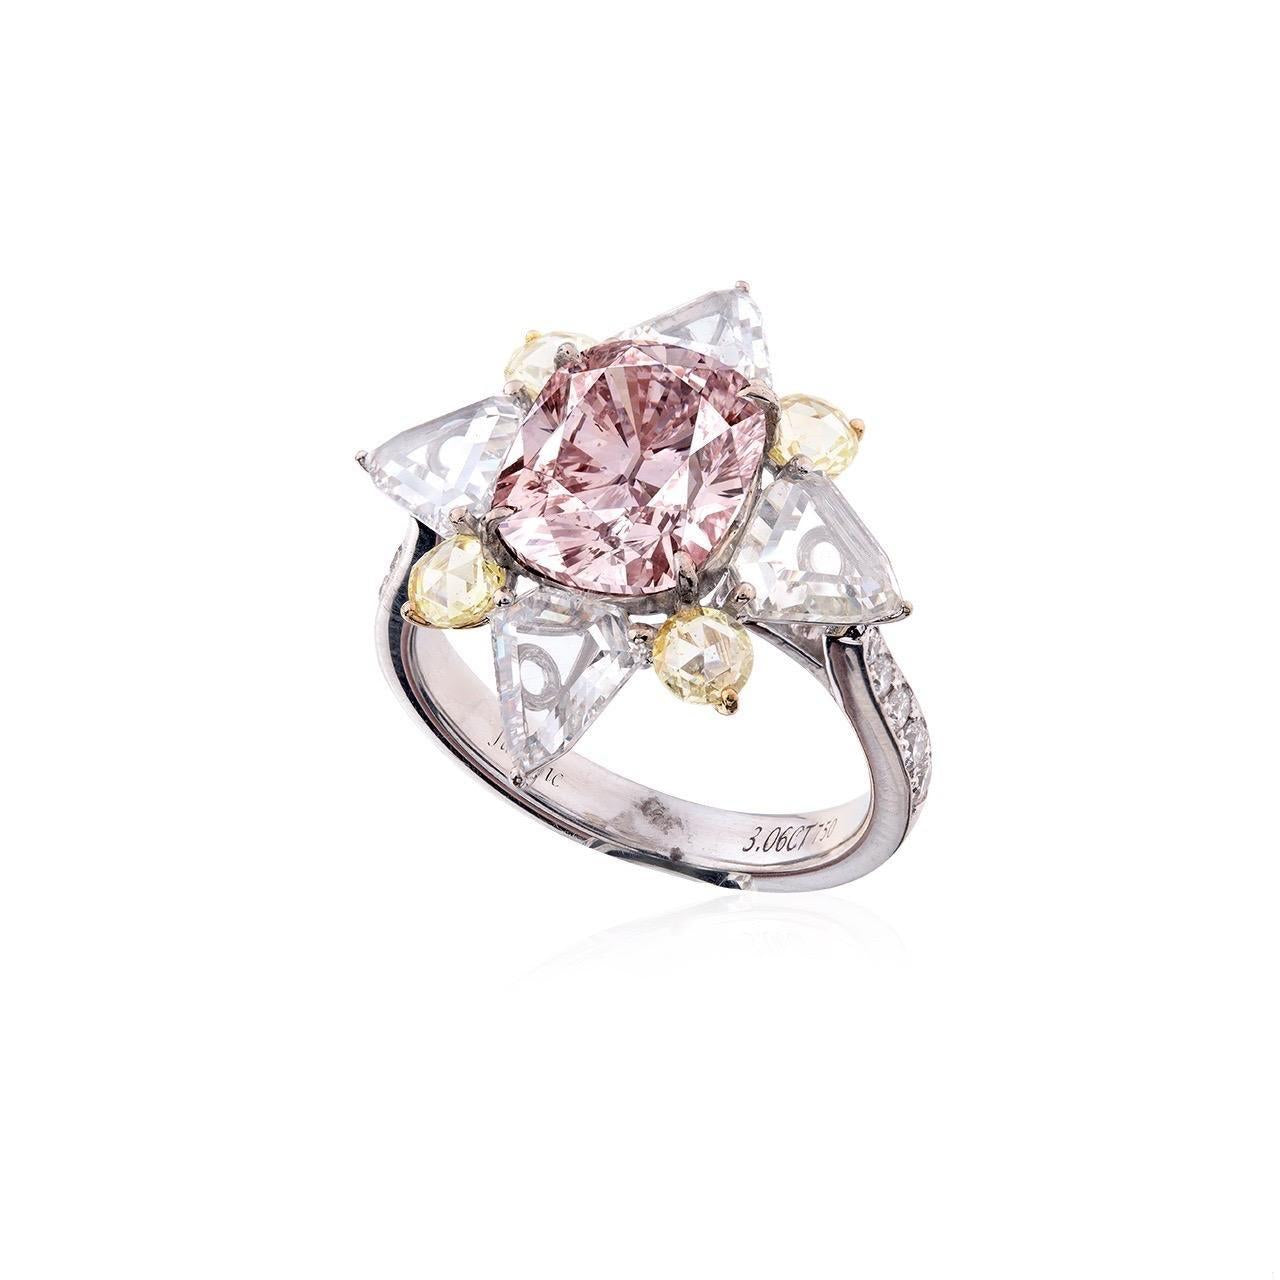 Emilio Jewelry Gia Certified 3.20 Carat Light Pink Diamond Ring